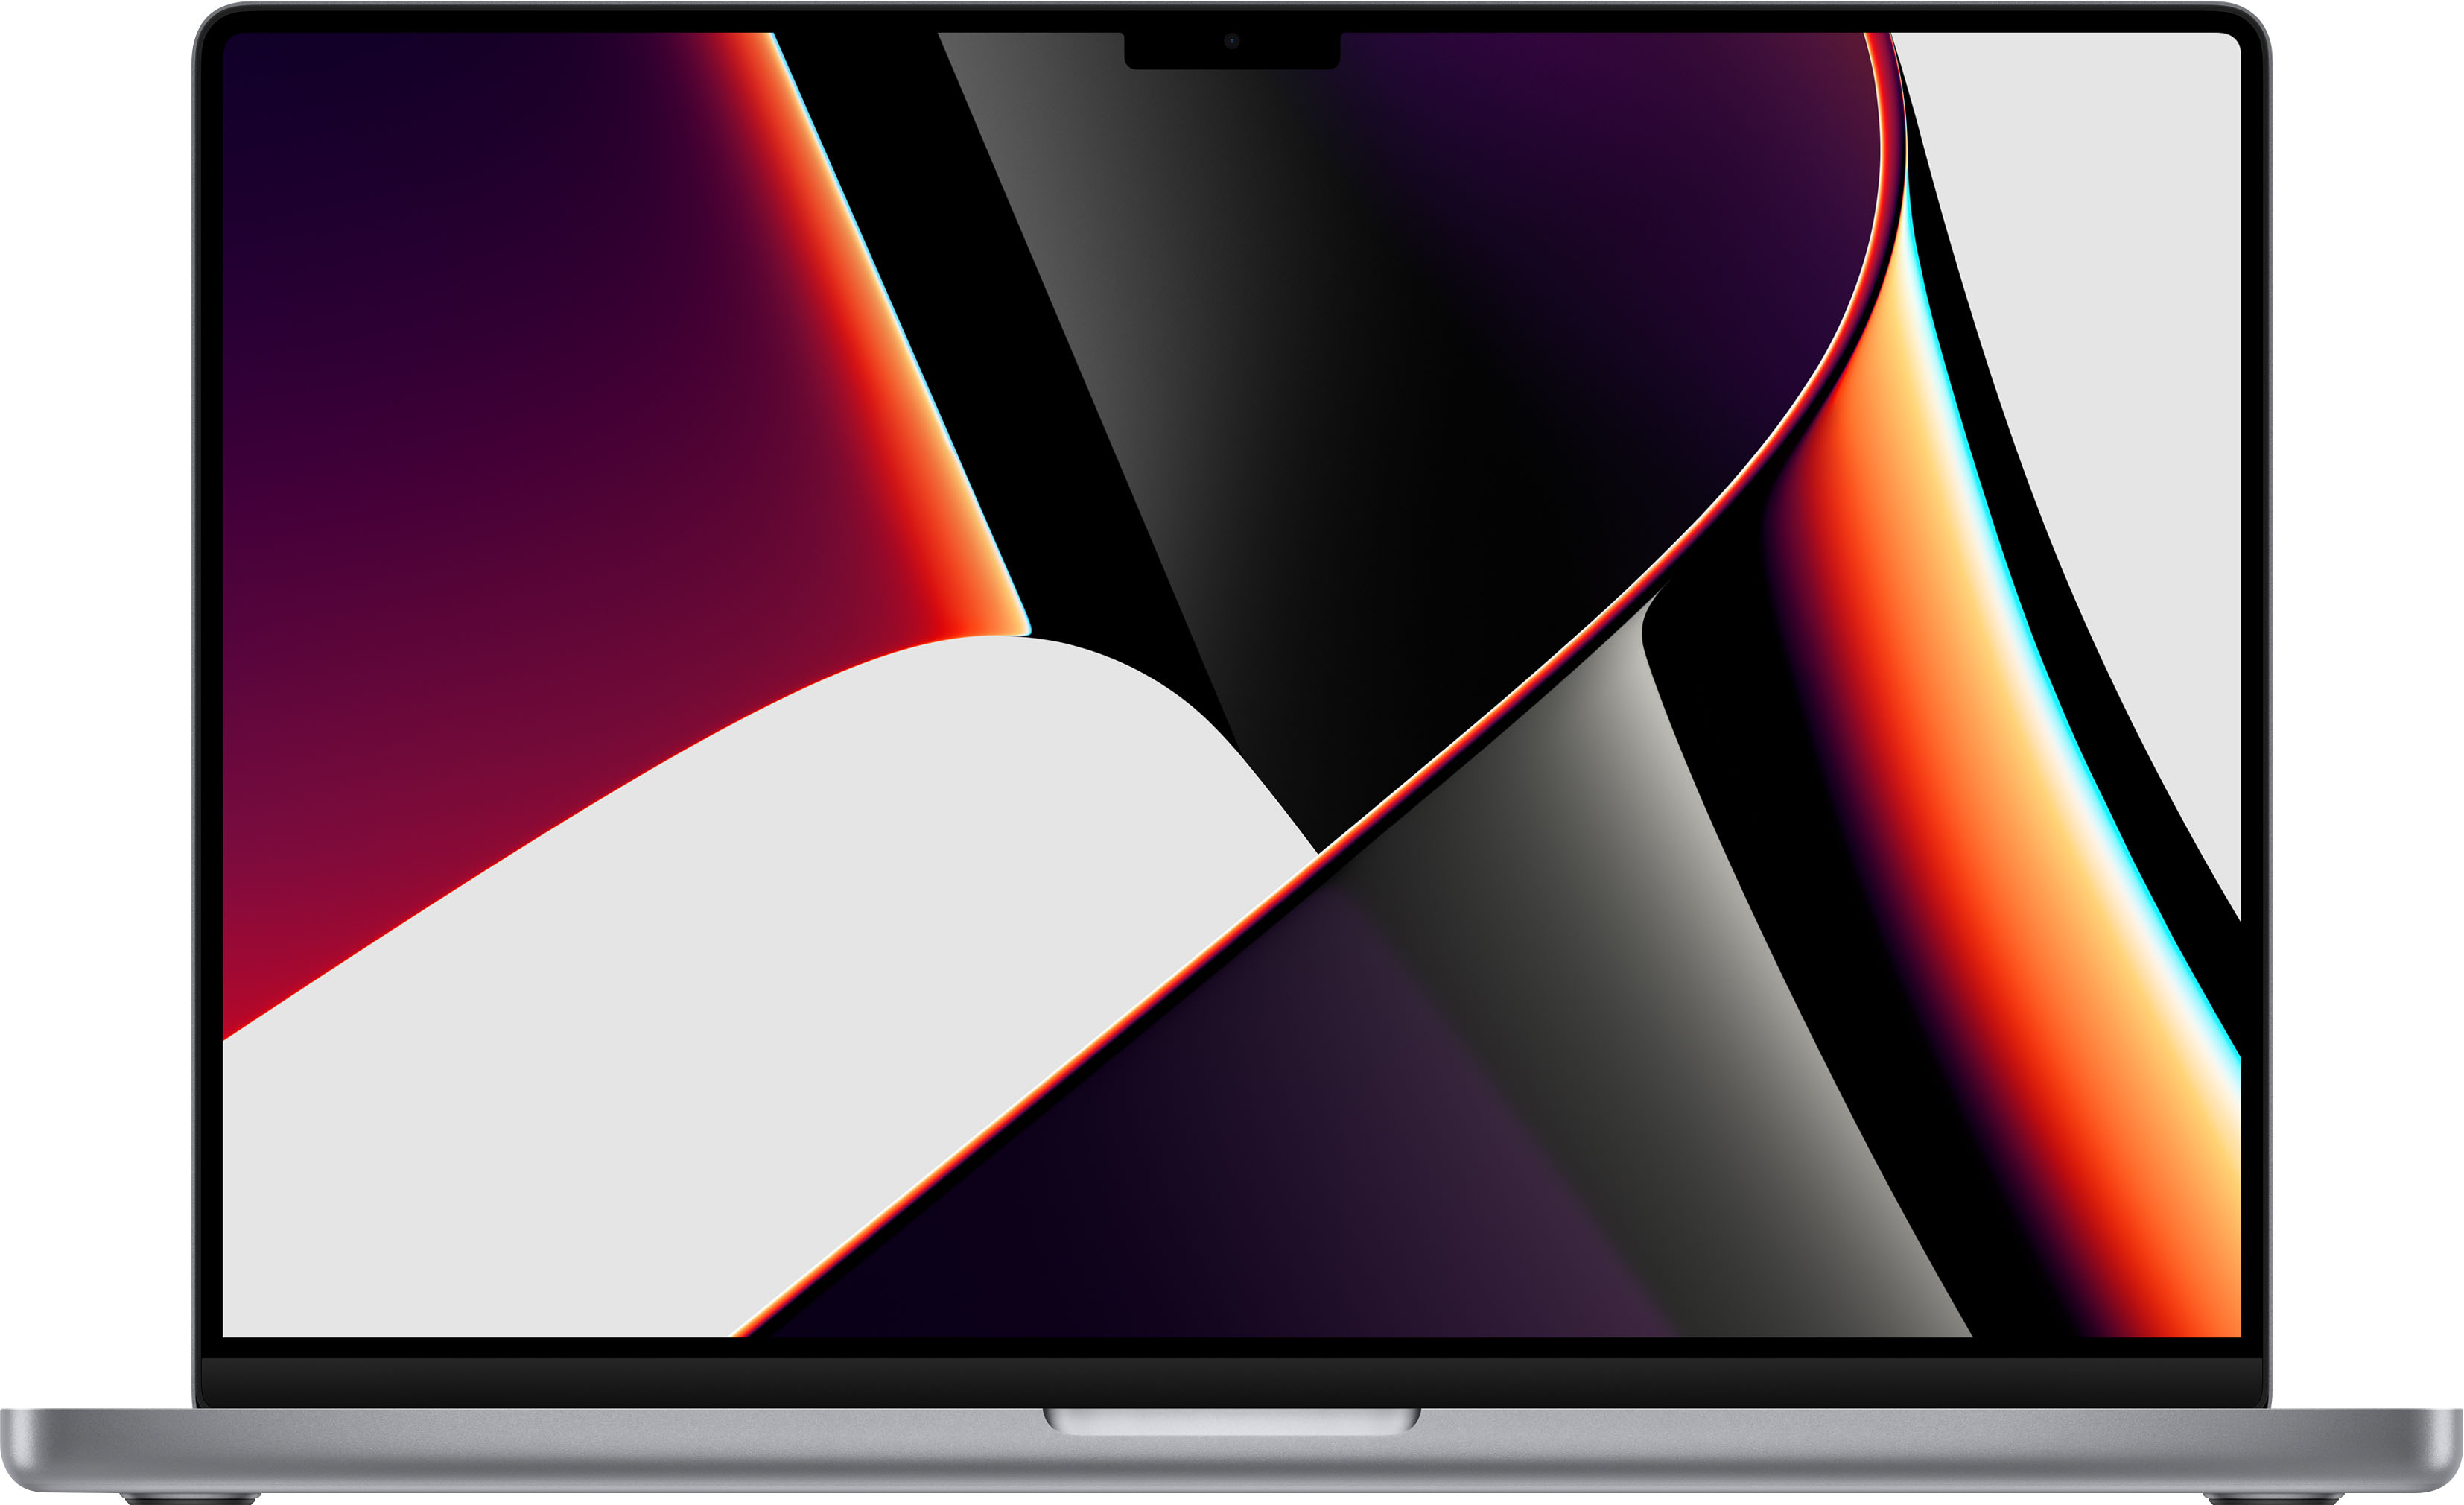 MacBook Pro 16" Laptop Apple M1 Pro chip 16GB Memory 1TB SSD (Latest Model) Space Gray MK193LL/A - $2199.00 Best Buy